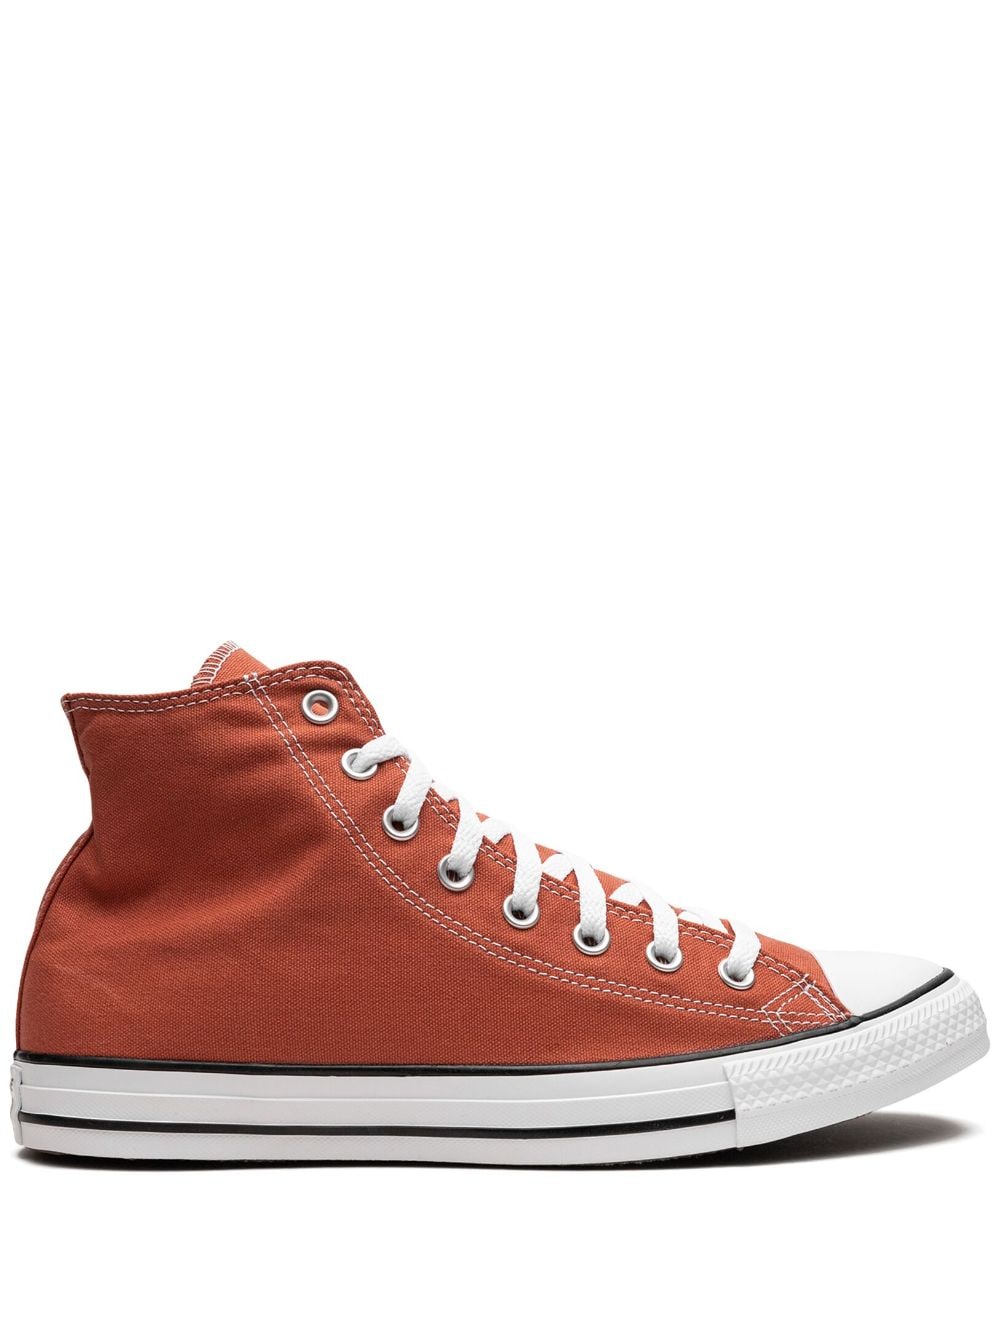 Converse All Star Hi sneakers - Orange von Converse